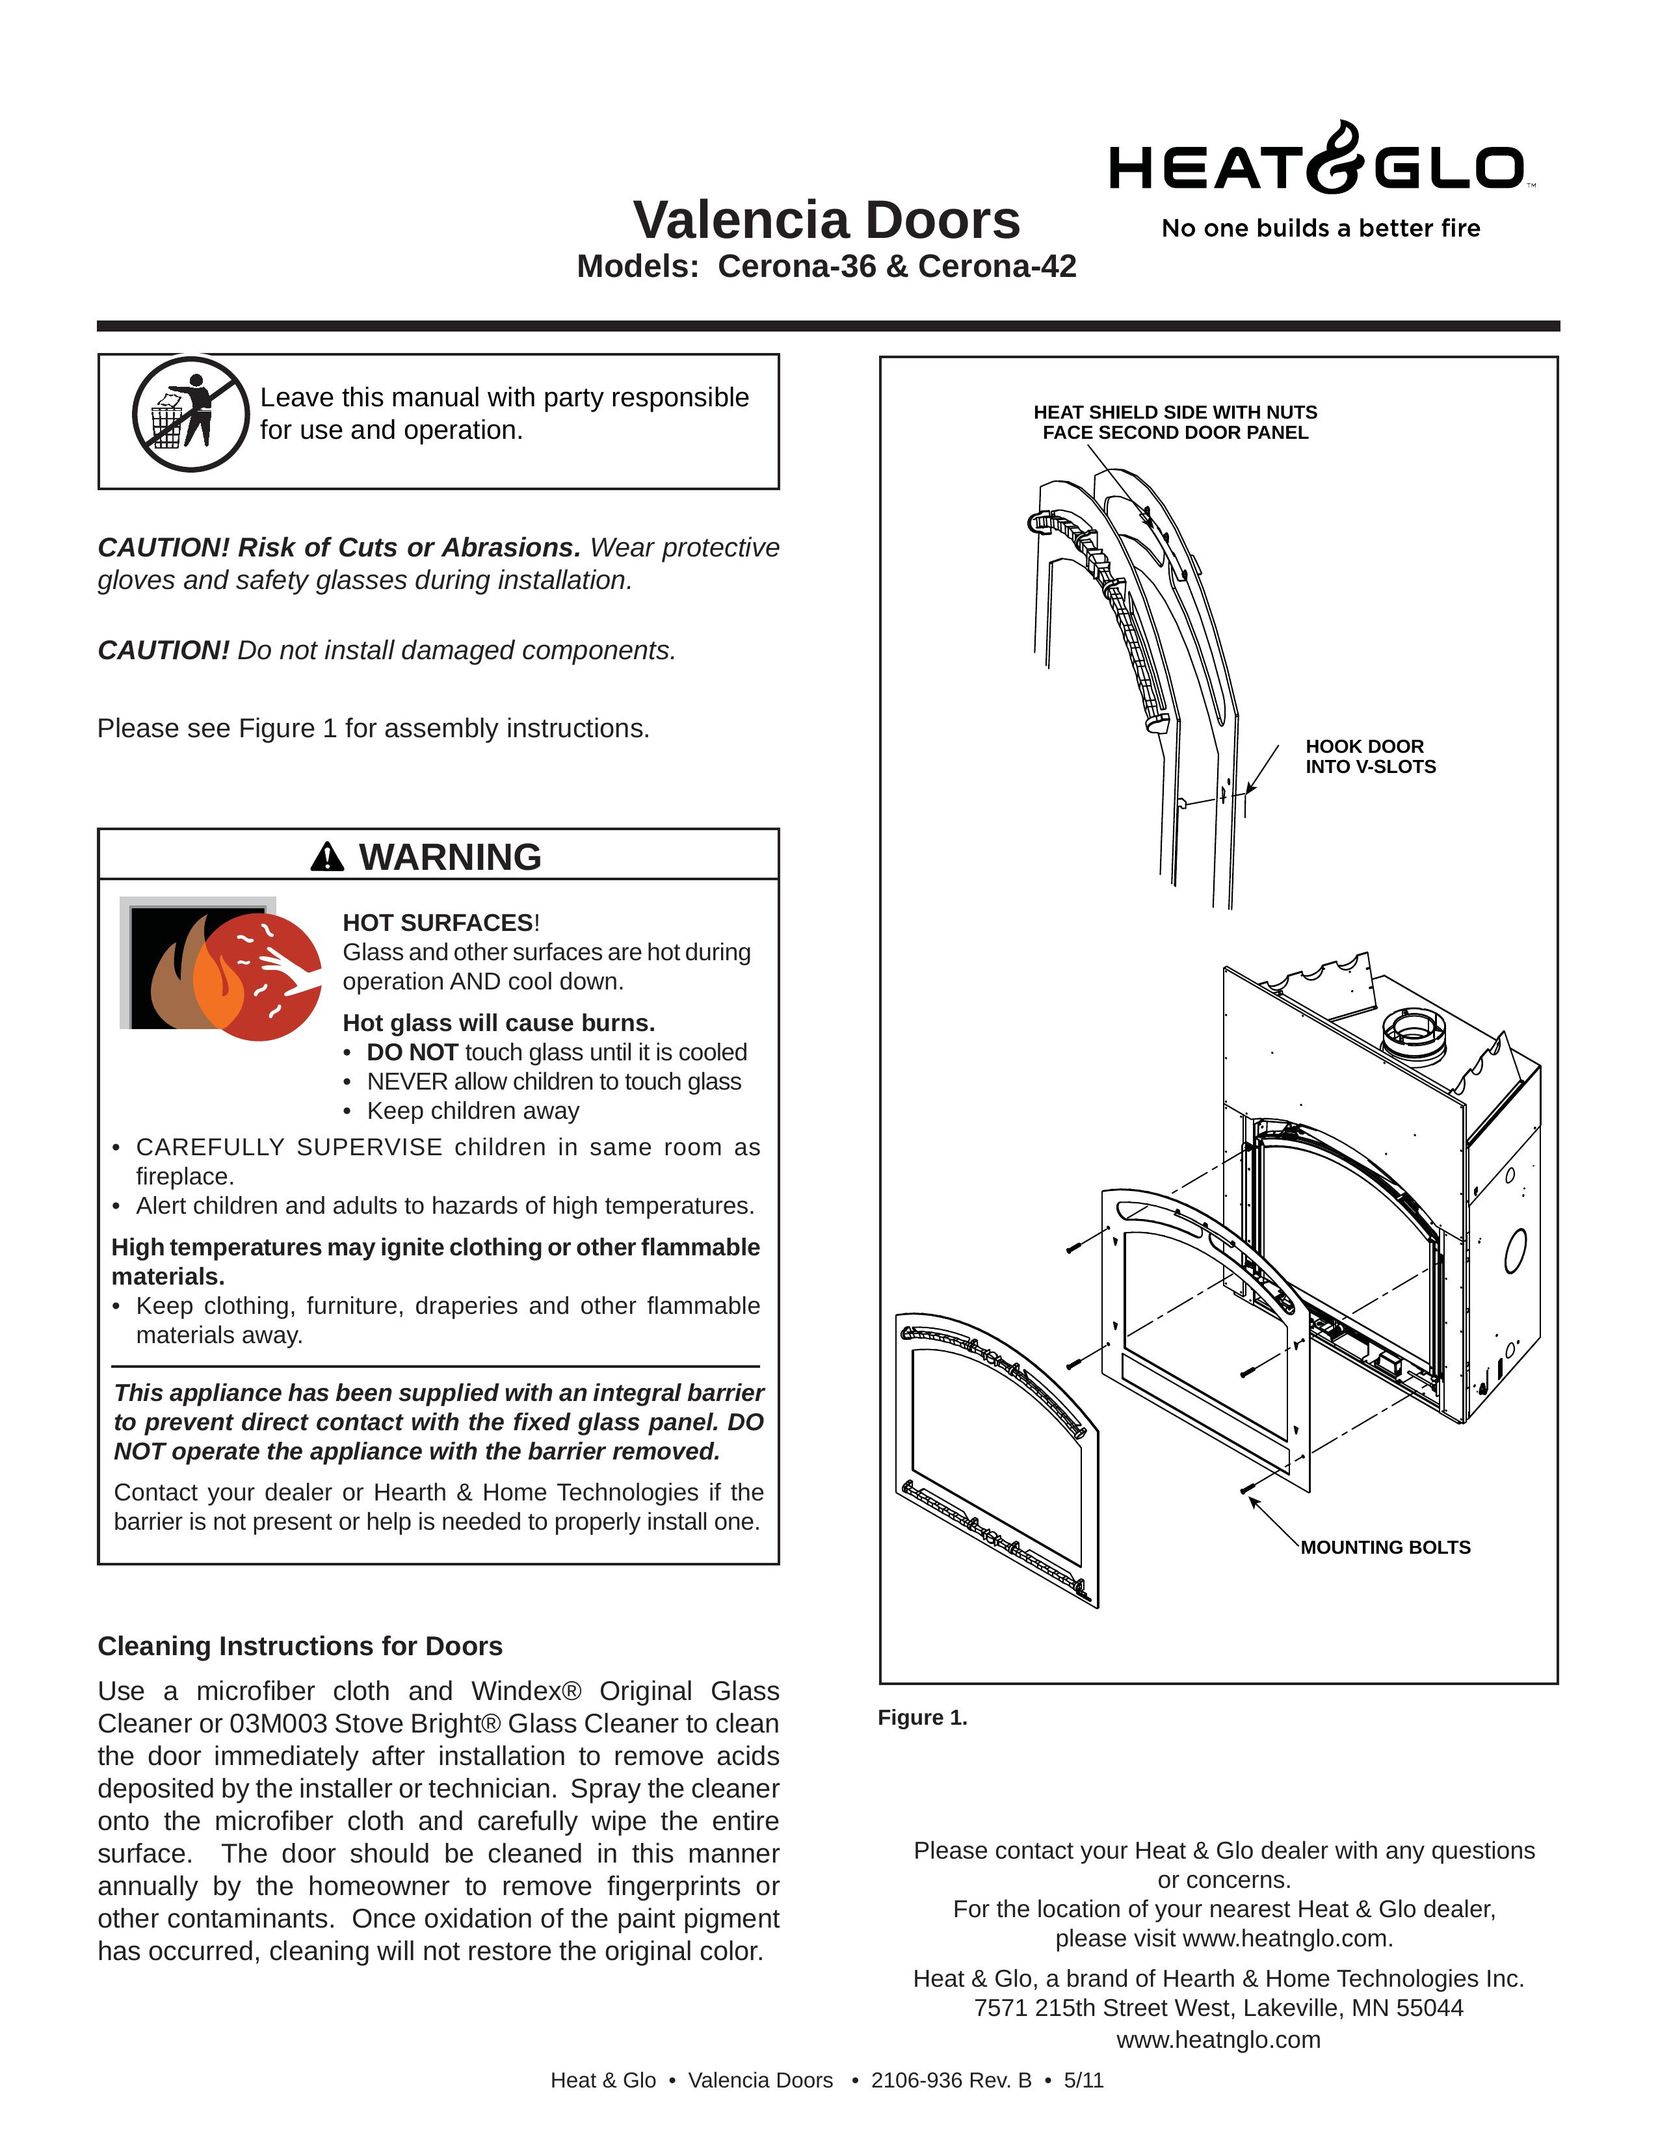 Heat & Glo LifeStyle CERONA-42 Door User Manual